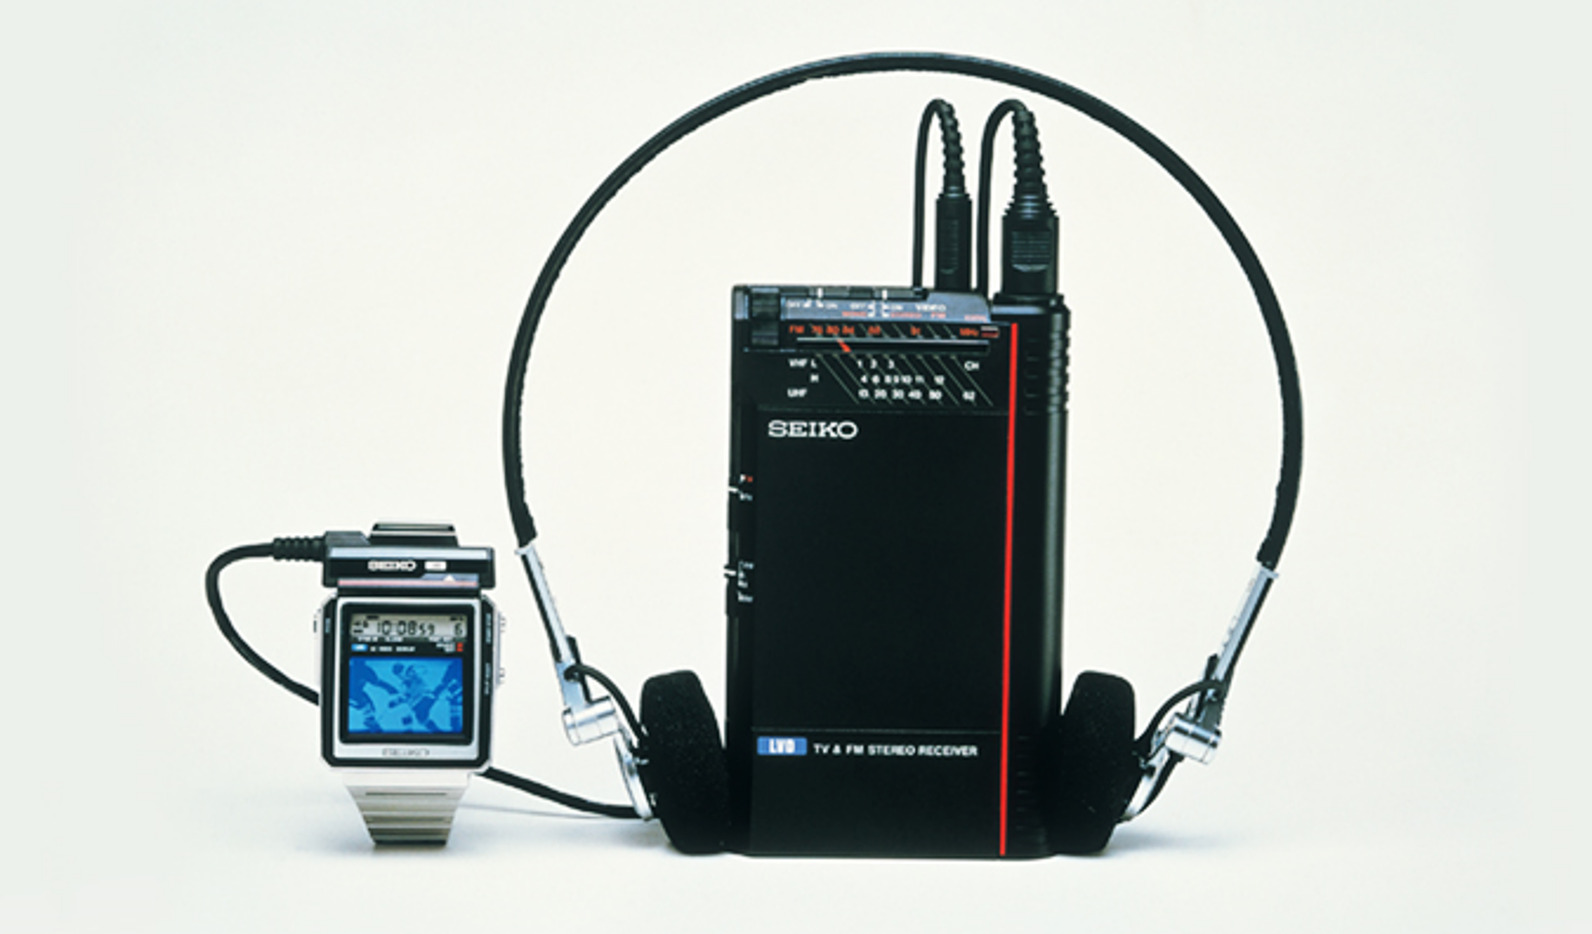 Seiko TV Uhr FM Stereo Receiver